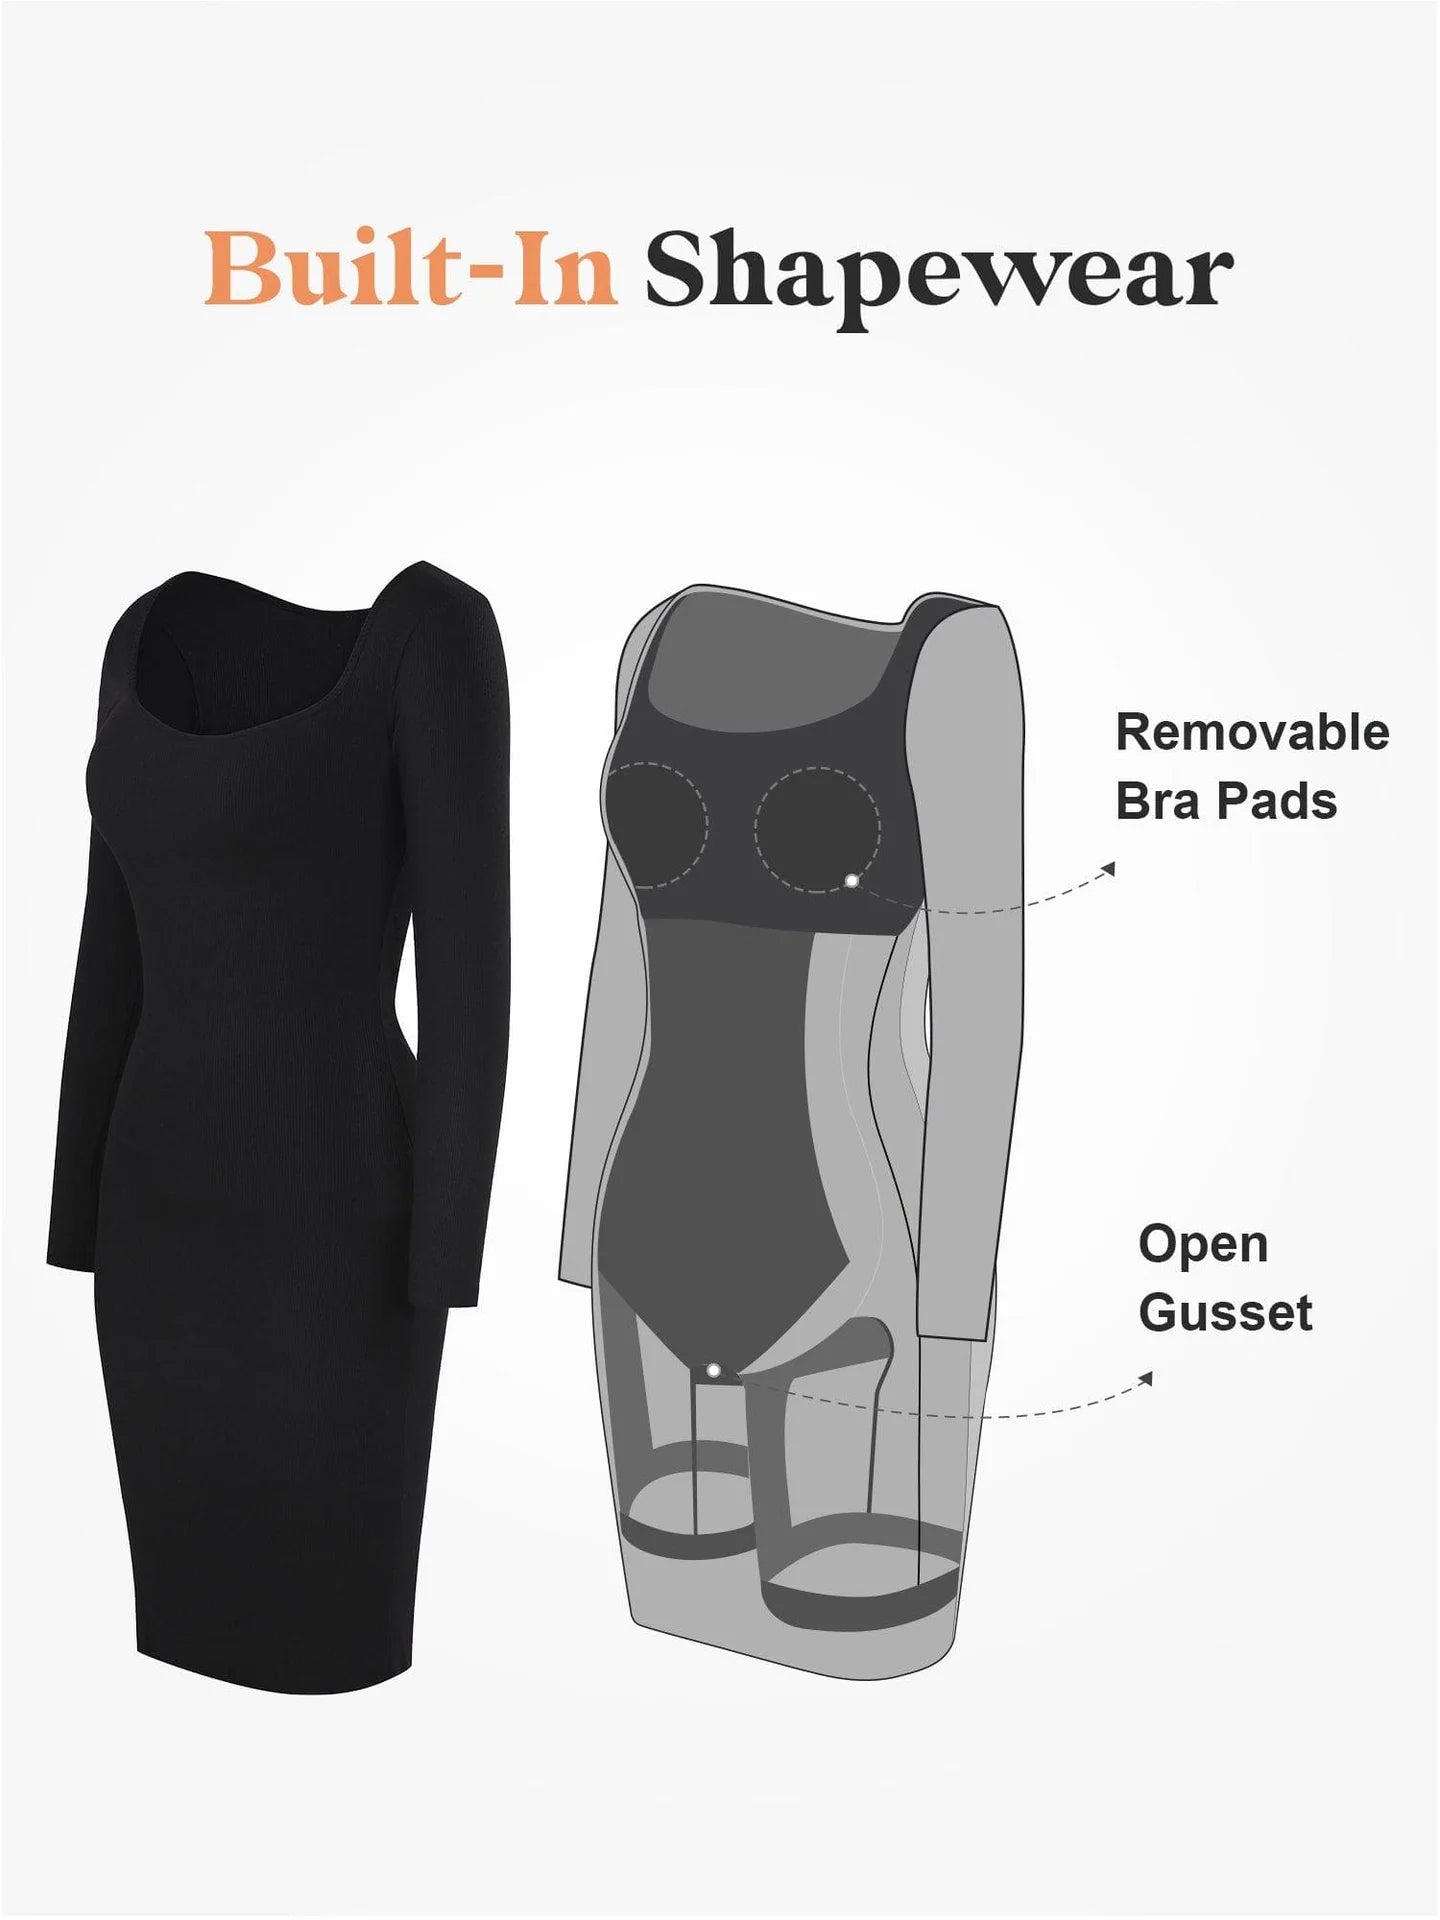 Loday Full Slip Dress With Built in Bra Bodysuit Shapewear Sleeveless for  Under Dresses Tummy Control Slimming Dress(Black， XL)